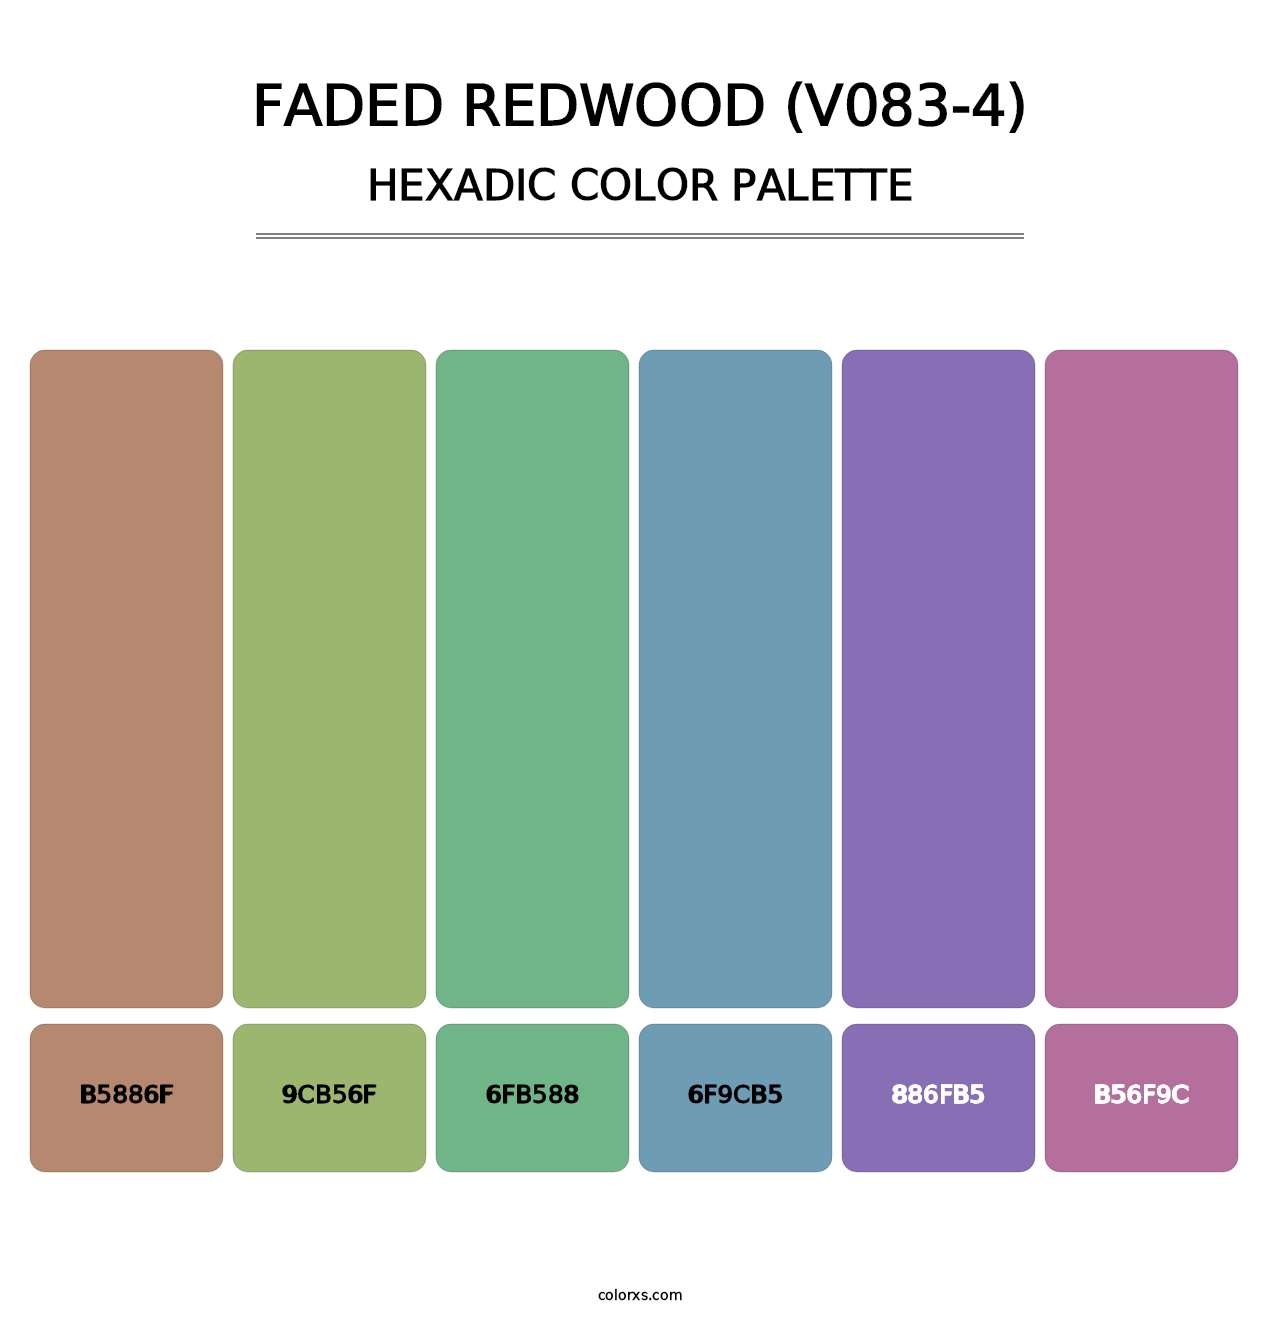 Faded Redwood (V083-4) - Hexadic Color Palette